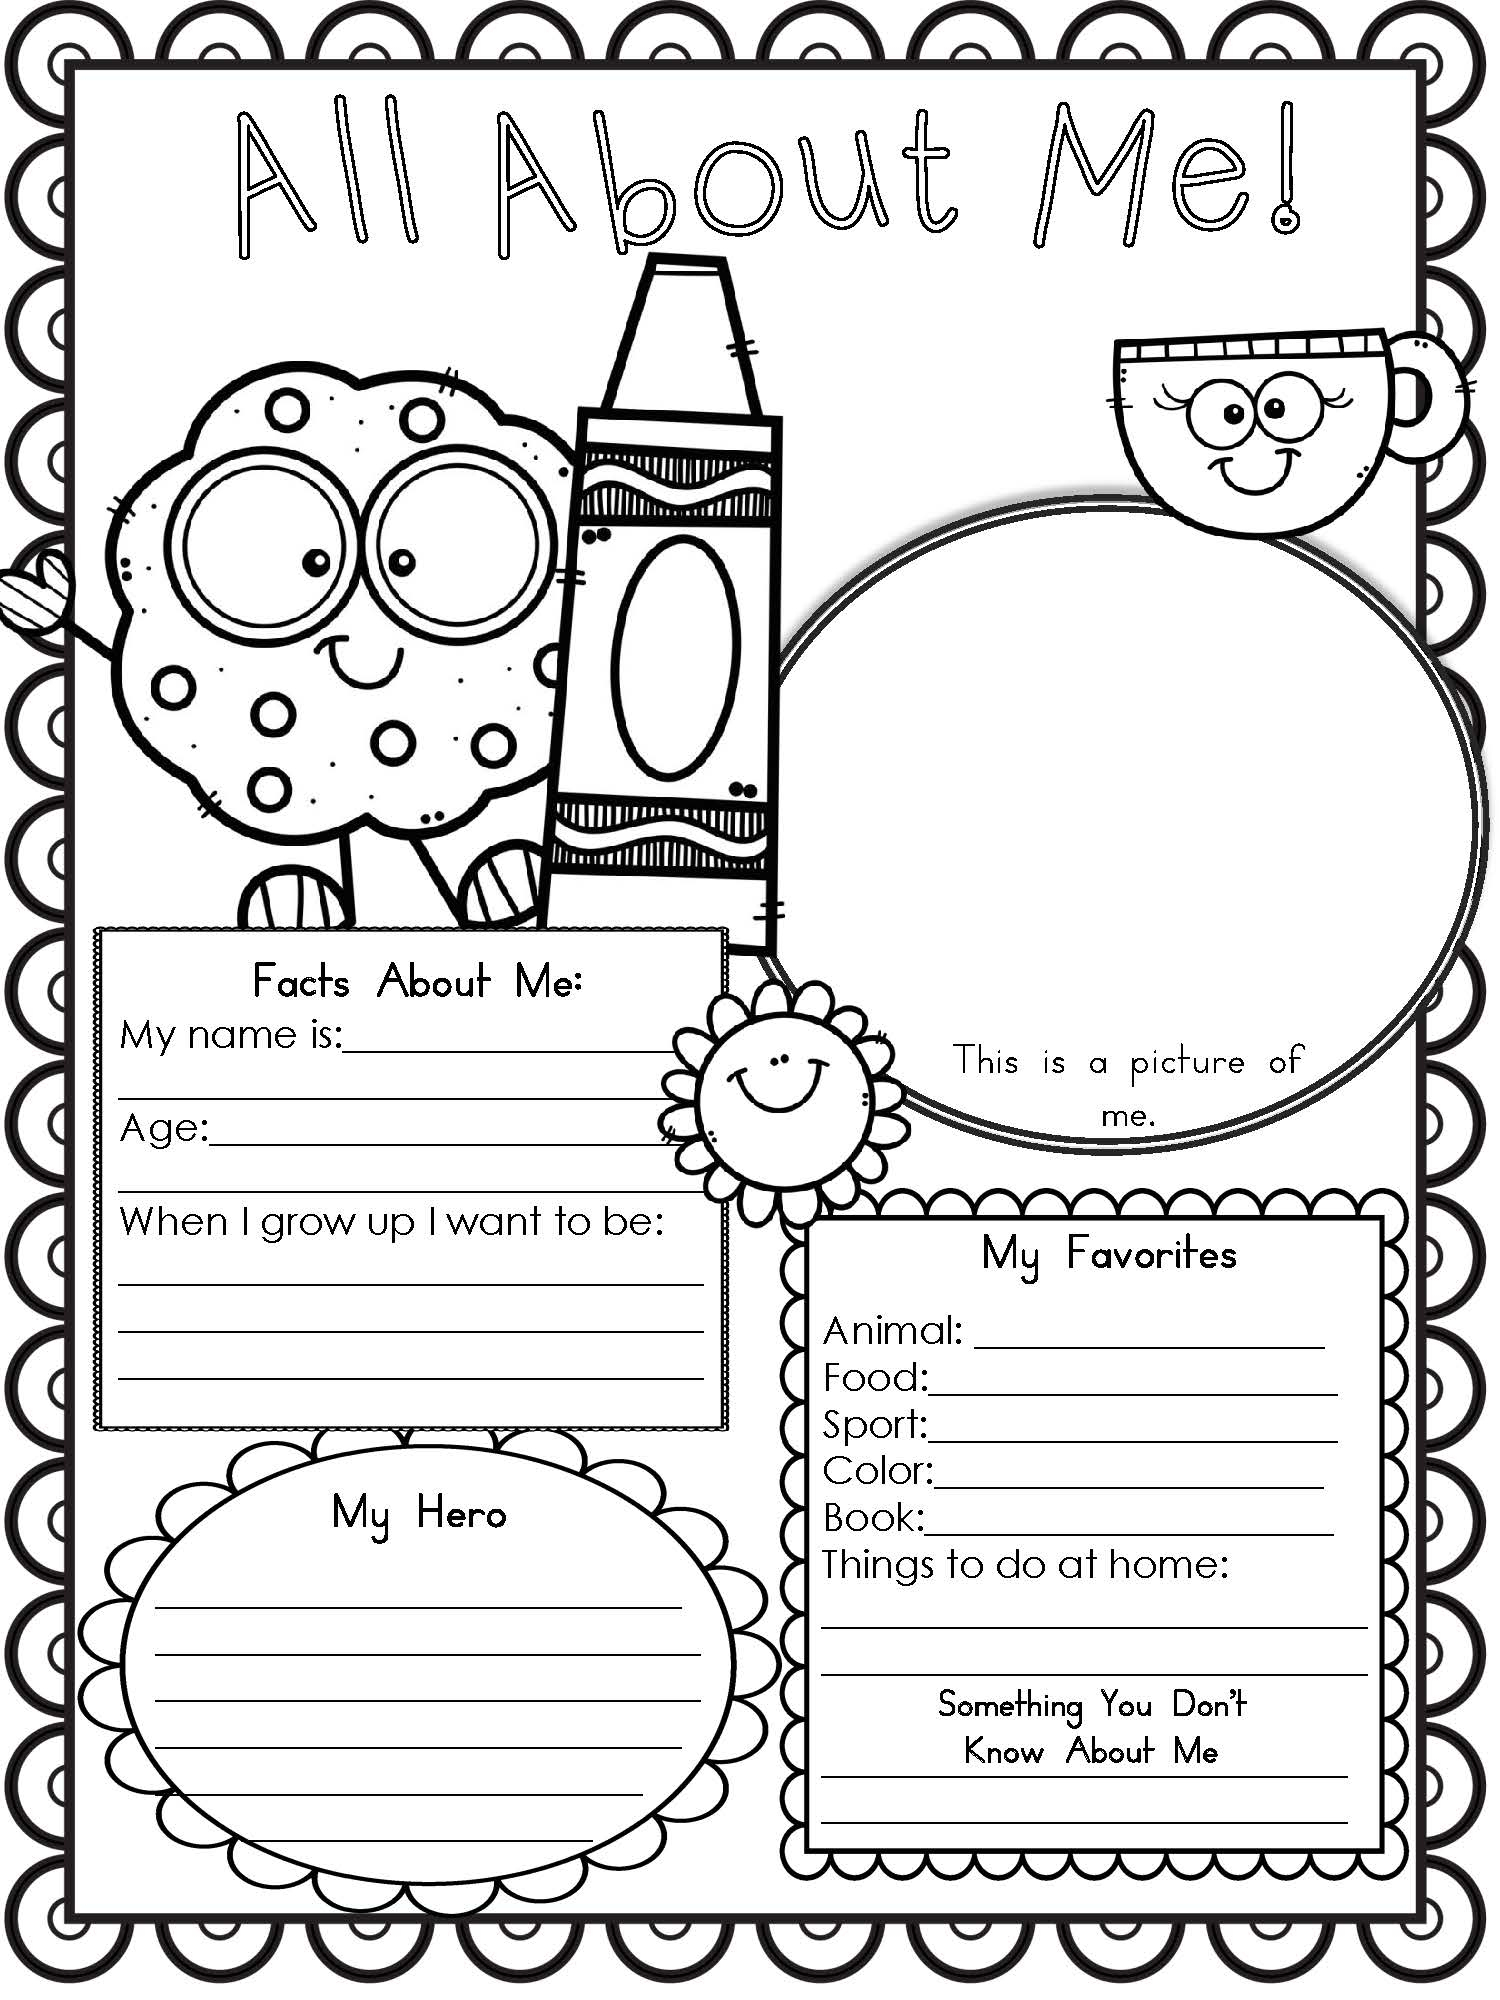 Preschool &amp; Kindergarten Archives - Modern Homeschool Family | All About Me Worksheet Preschool Printable